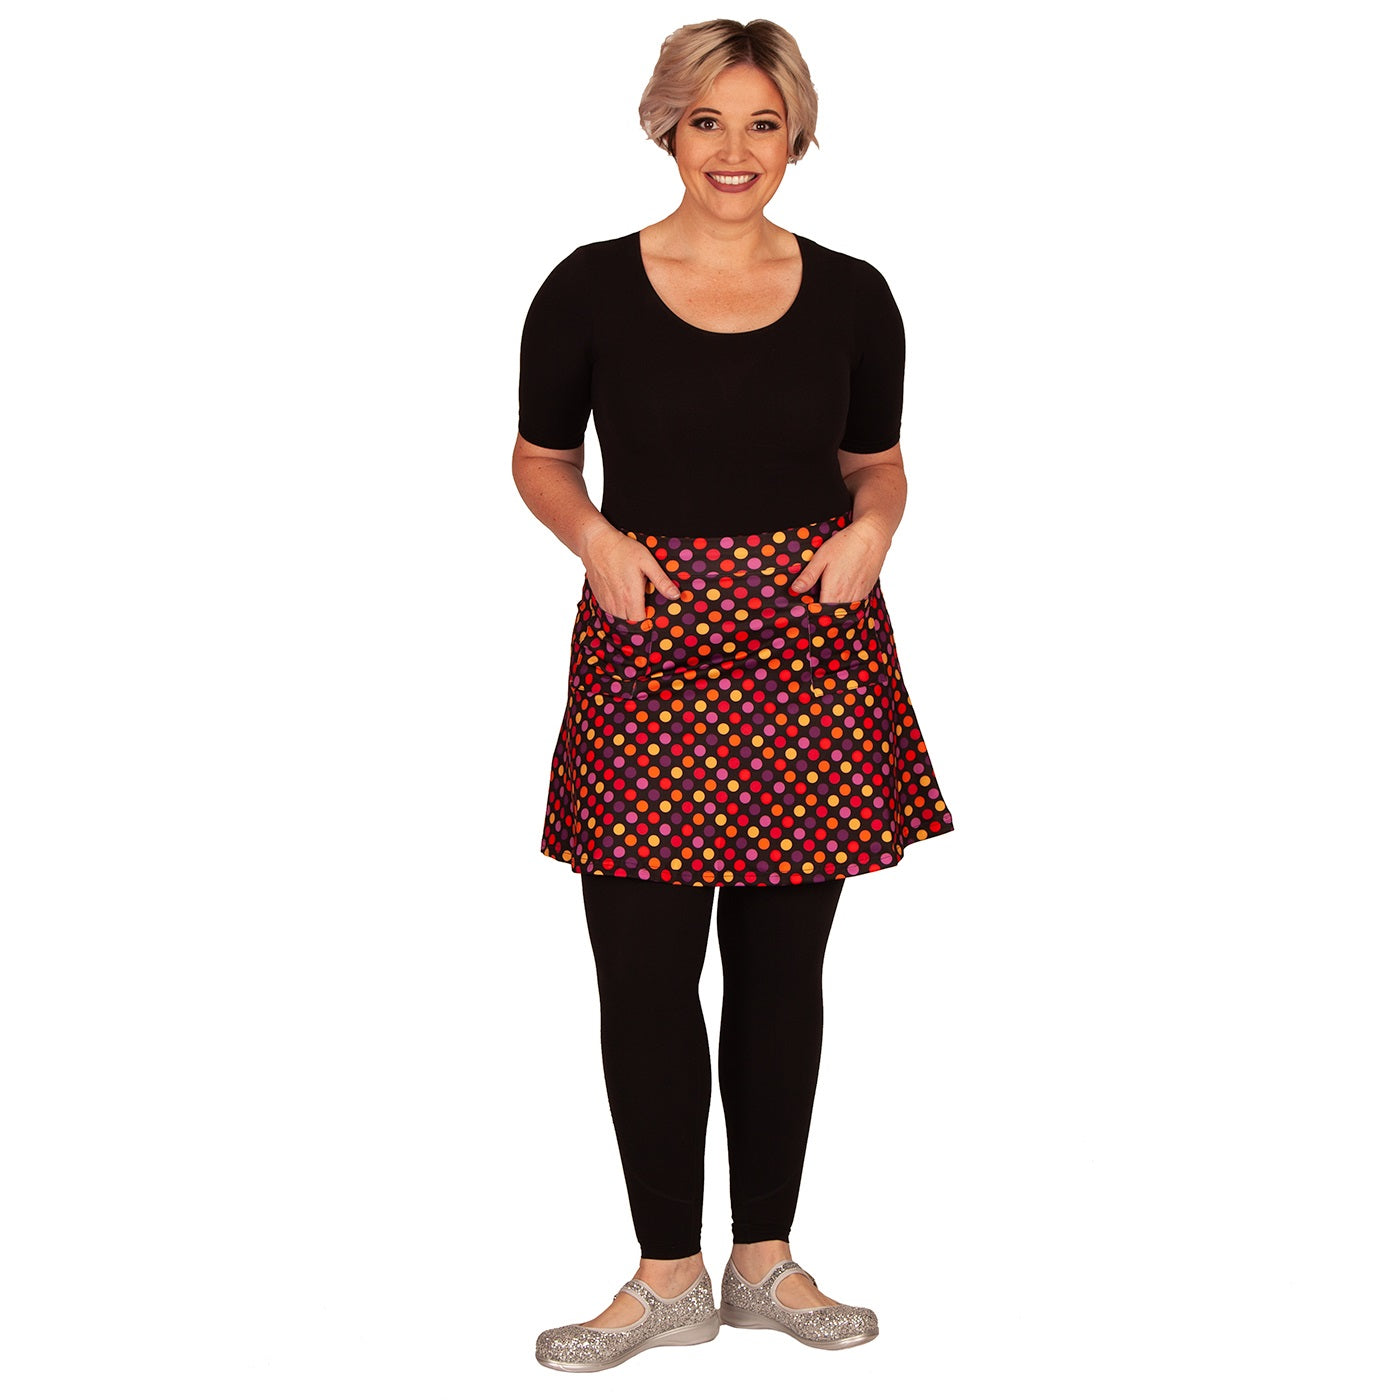 Pastel Confetti Short Skirt by RainbowsAndFairies.com (Pastel Polka Dots - Spots - Stripes - Skirt With Pockets - Aline Skirt - Cute Flirty - Vintage Inspired) - SKU: CL_SHORT_CONFT_PAS - Pic 05